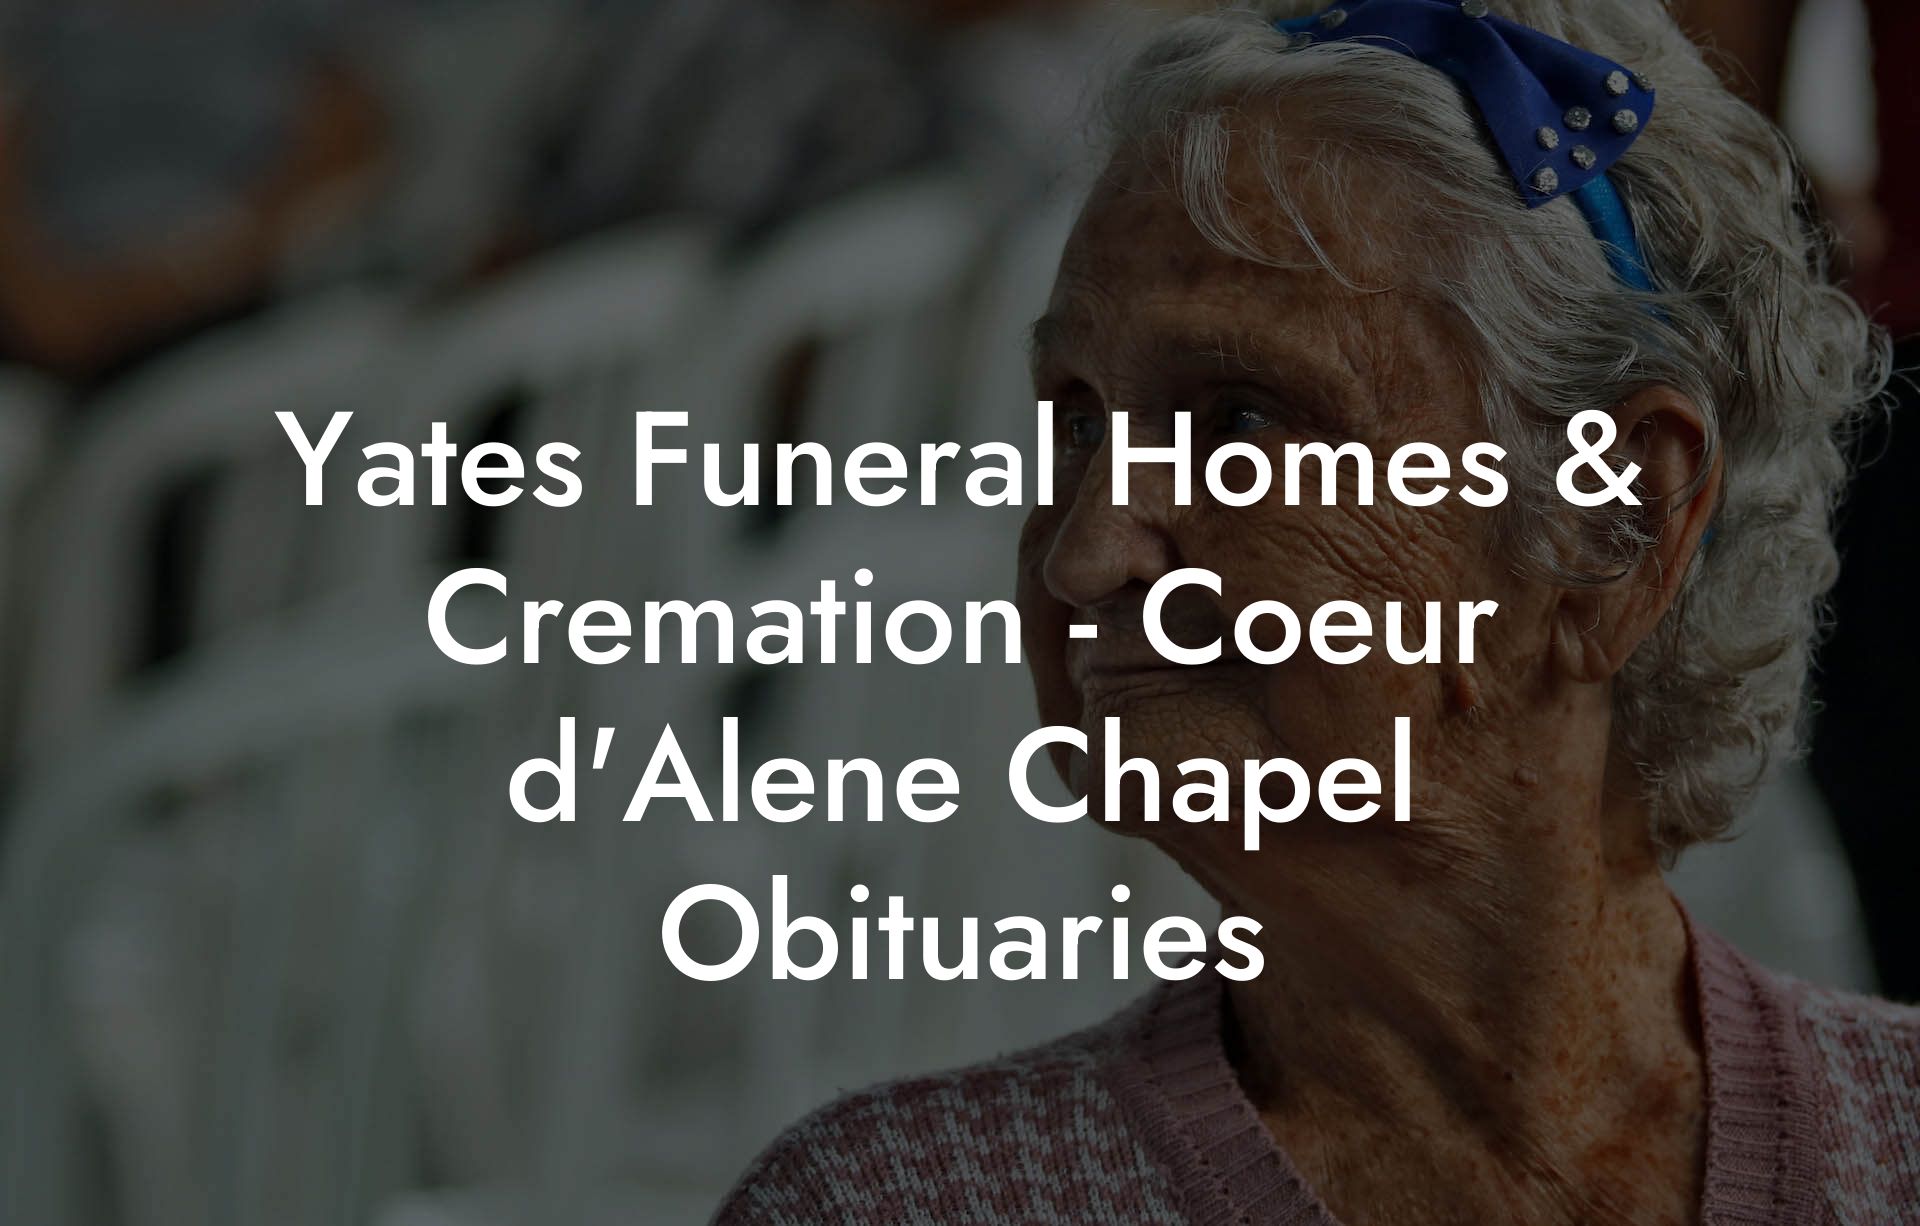 Yates Funeral Homes & Cremation - Coeur d'Alene Chapel Obituaries